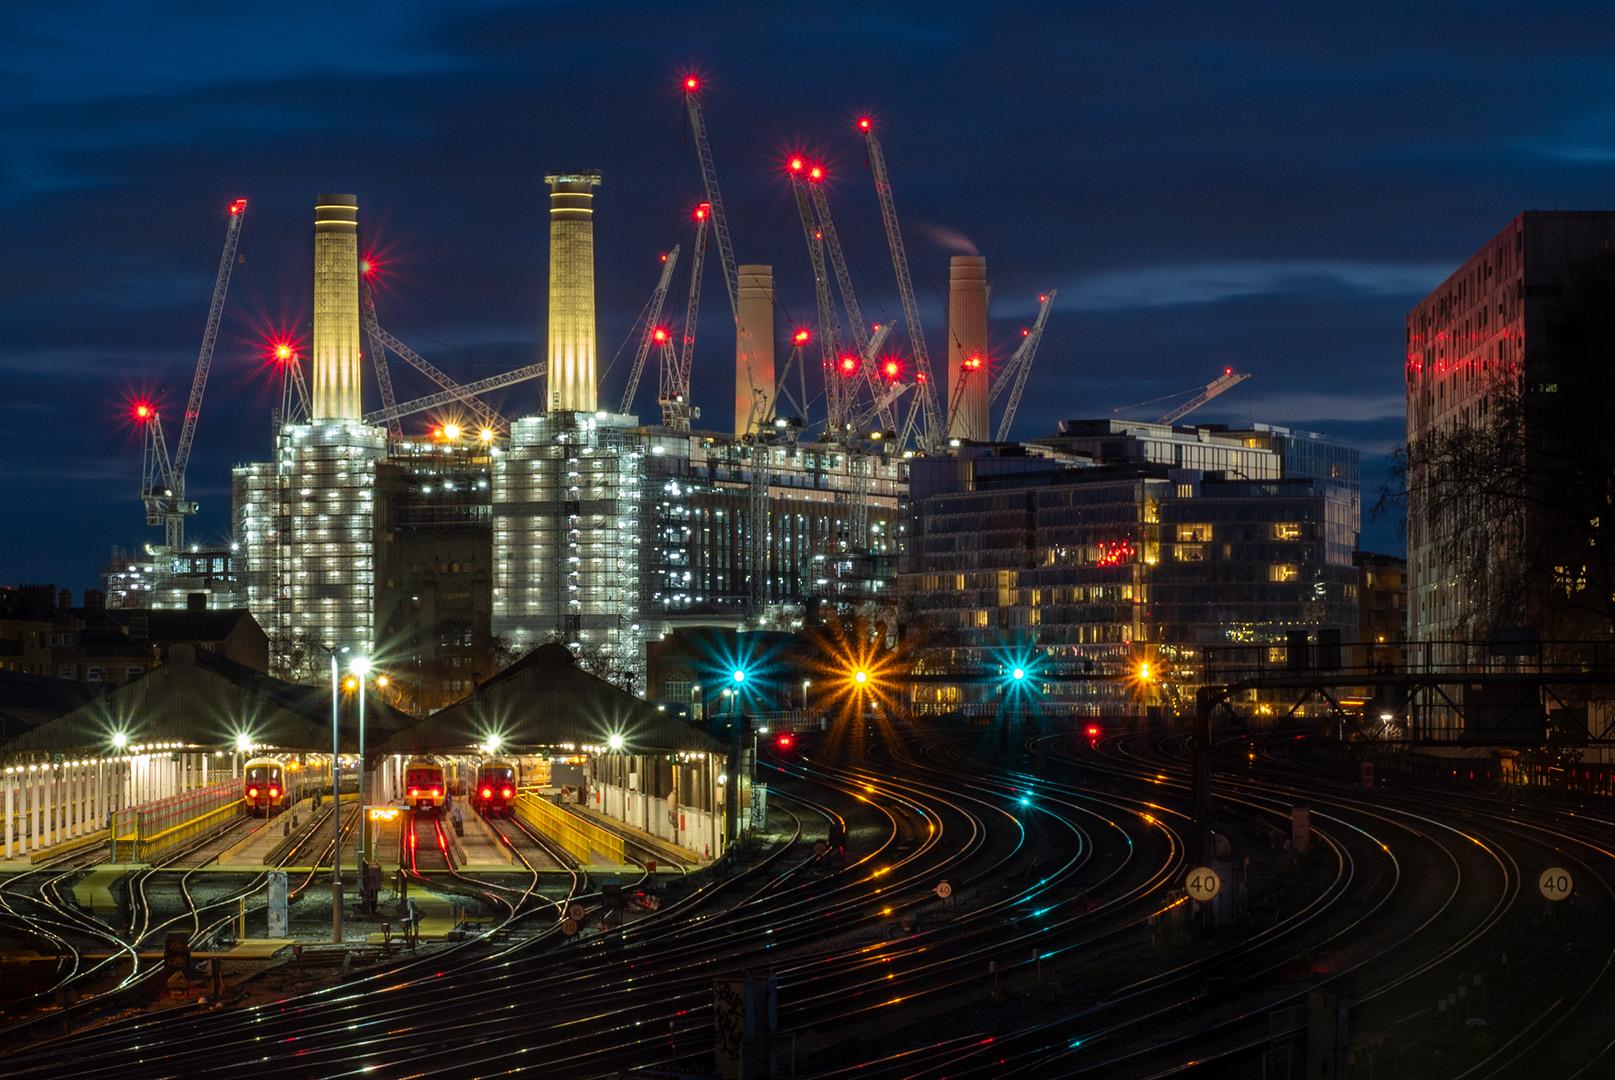 Battersea Power Station by Night